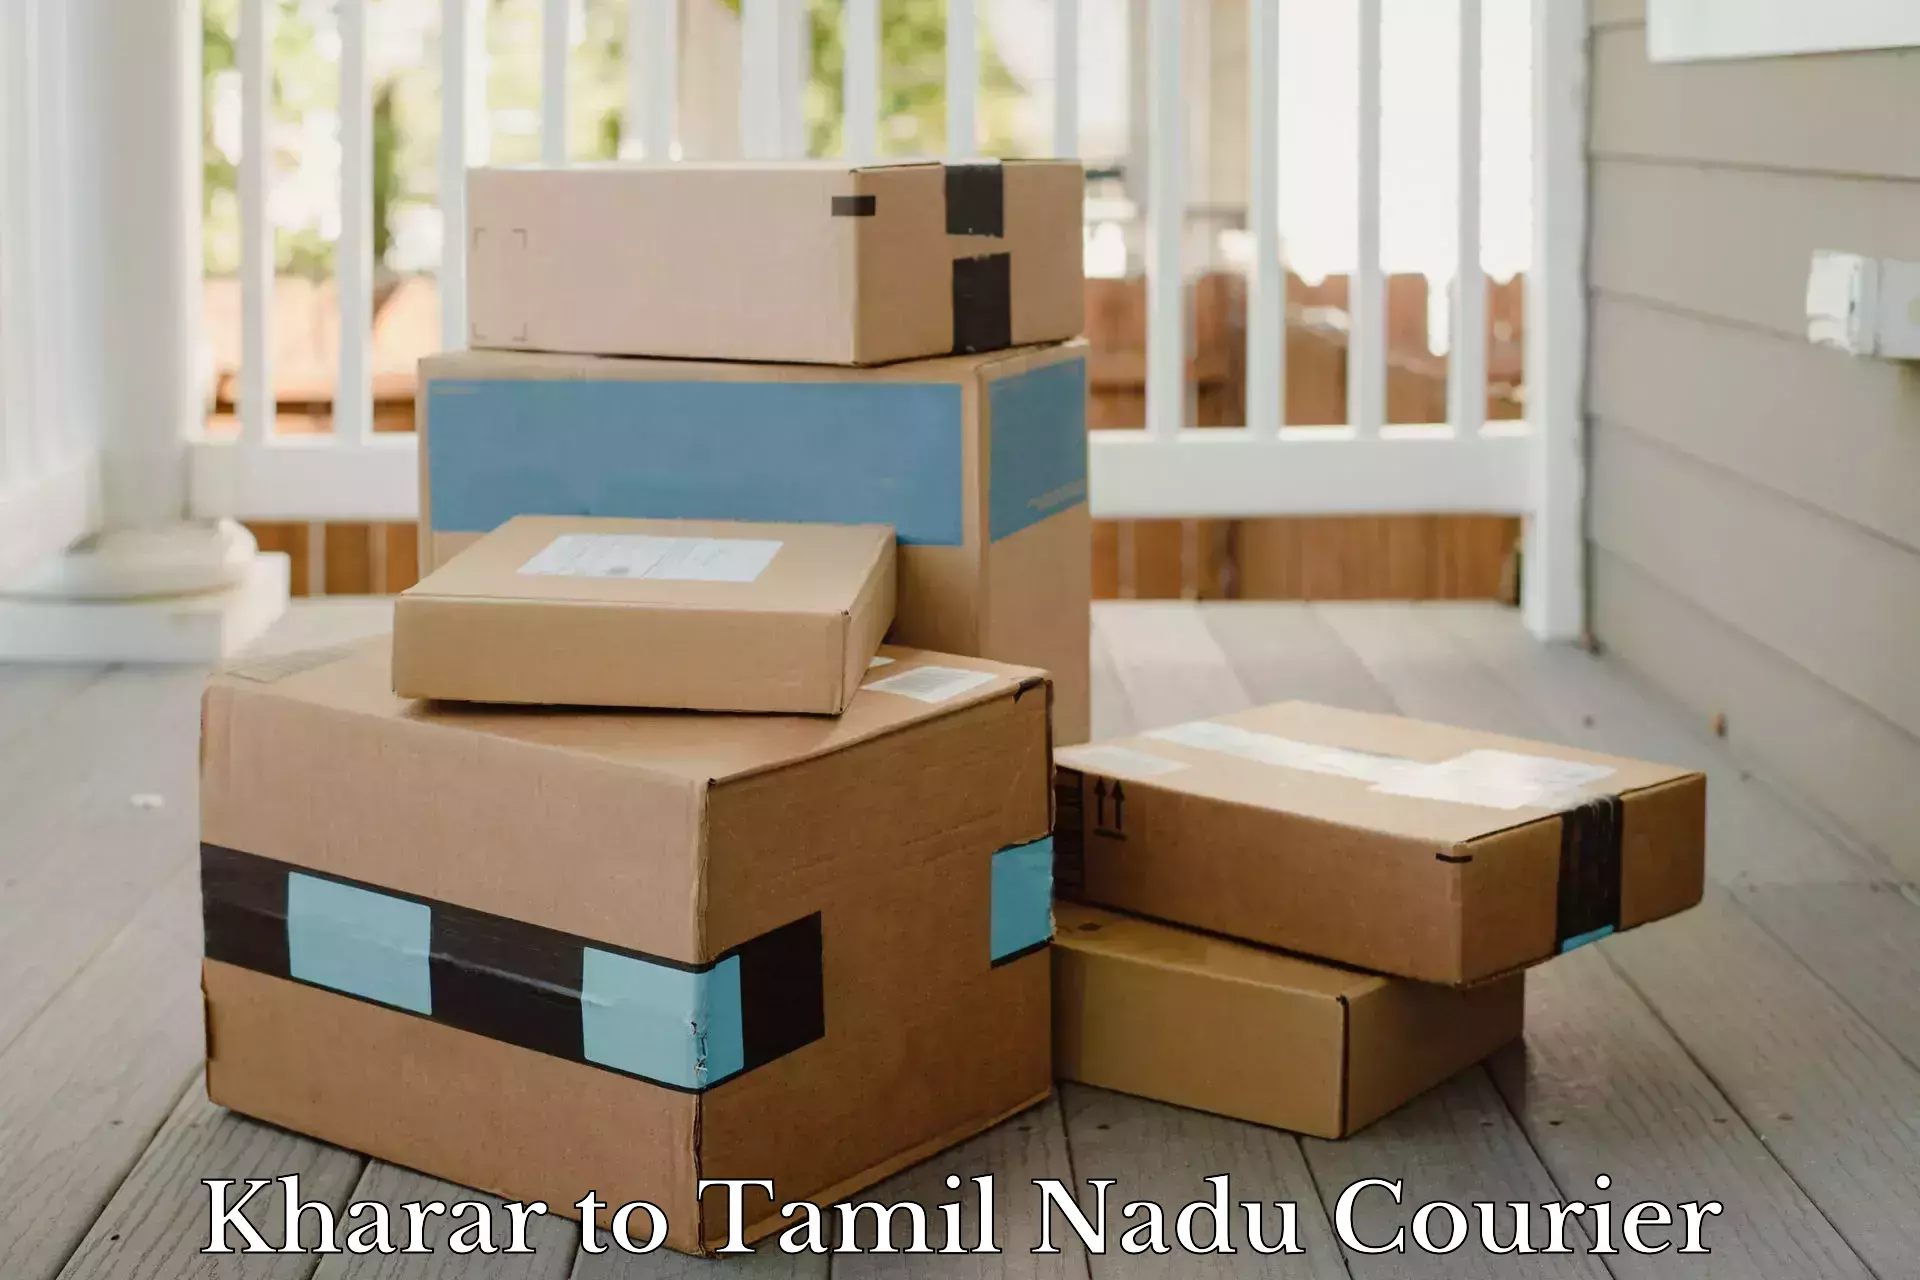 Delivery service partnership Kharar to Tamil Nadu